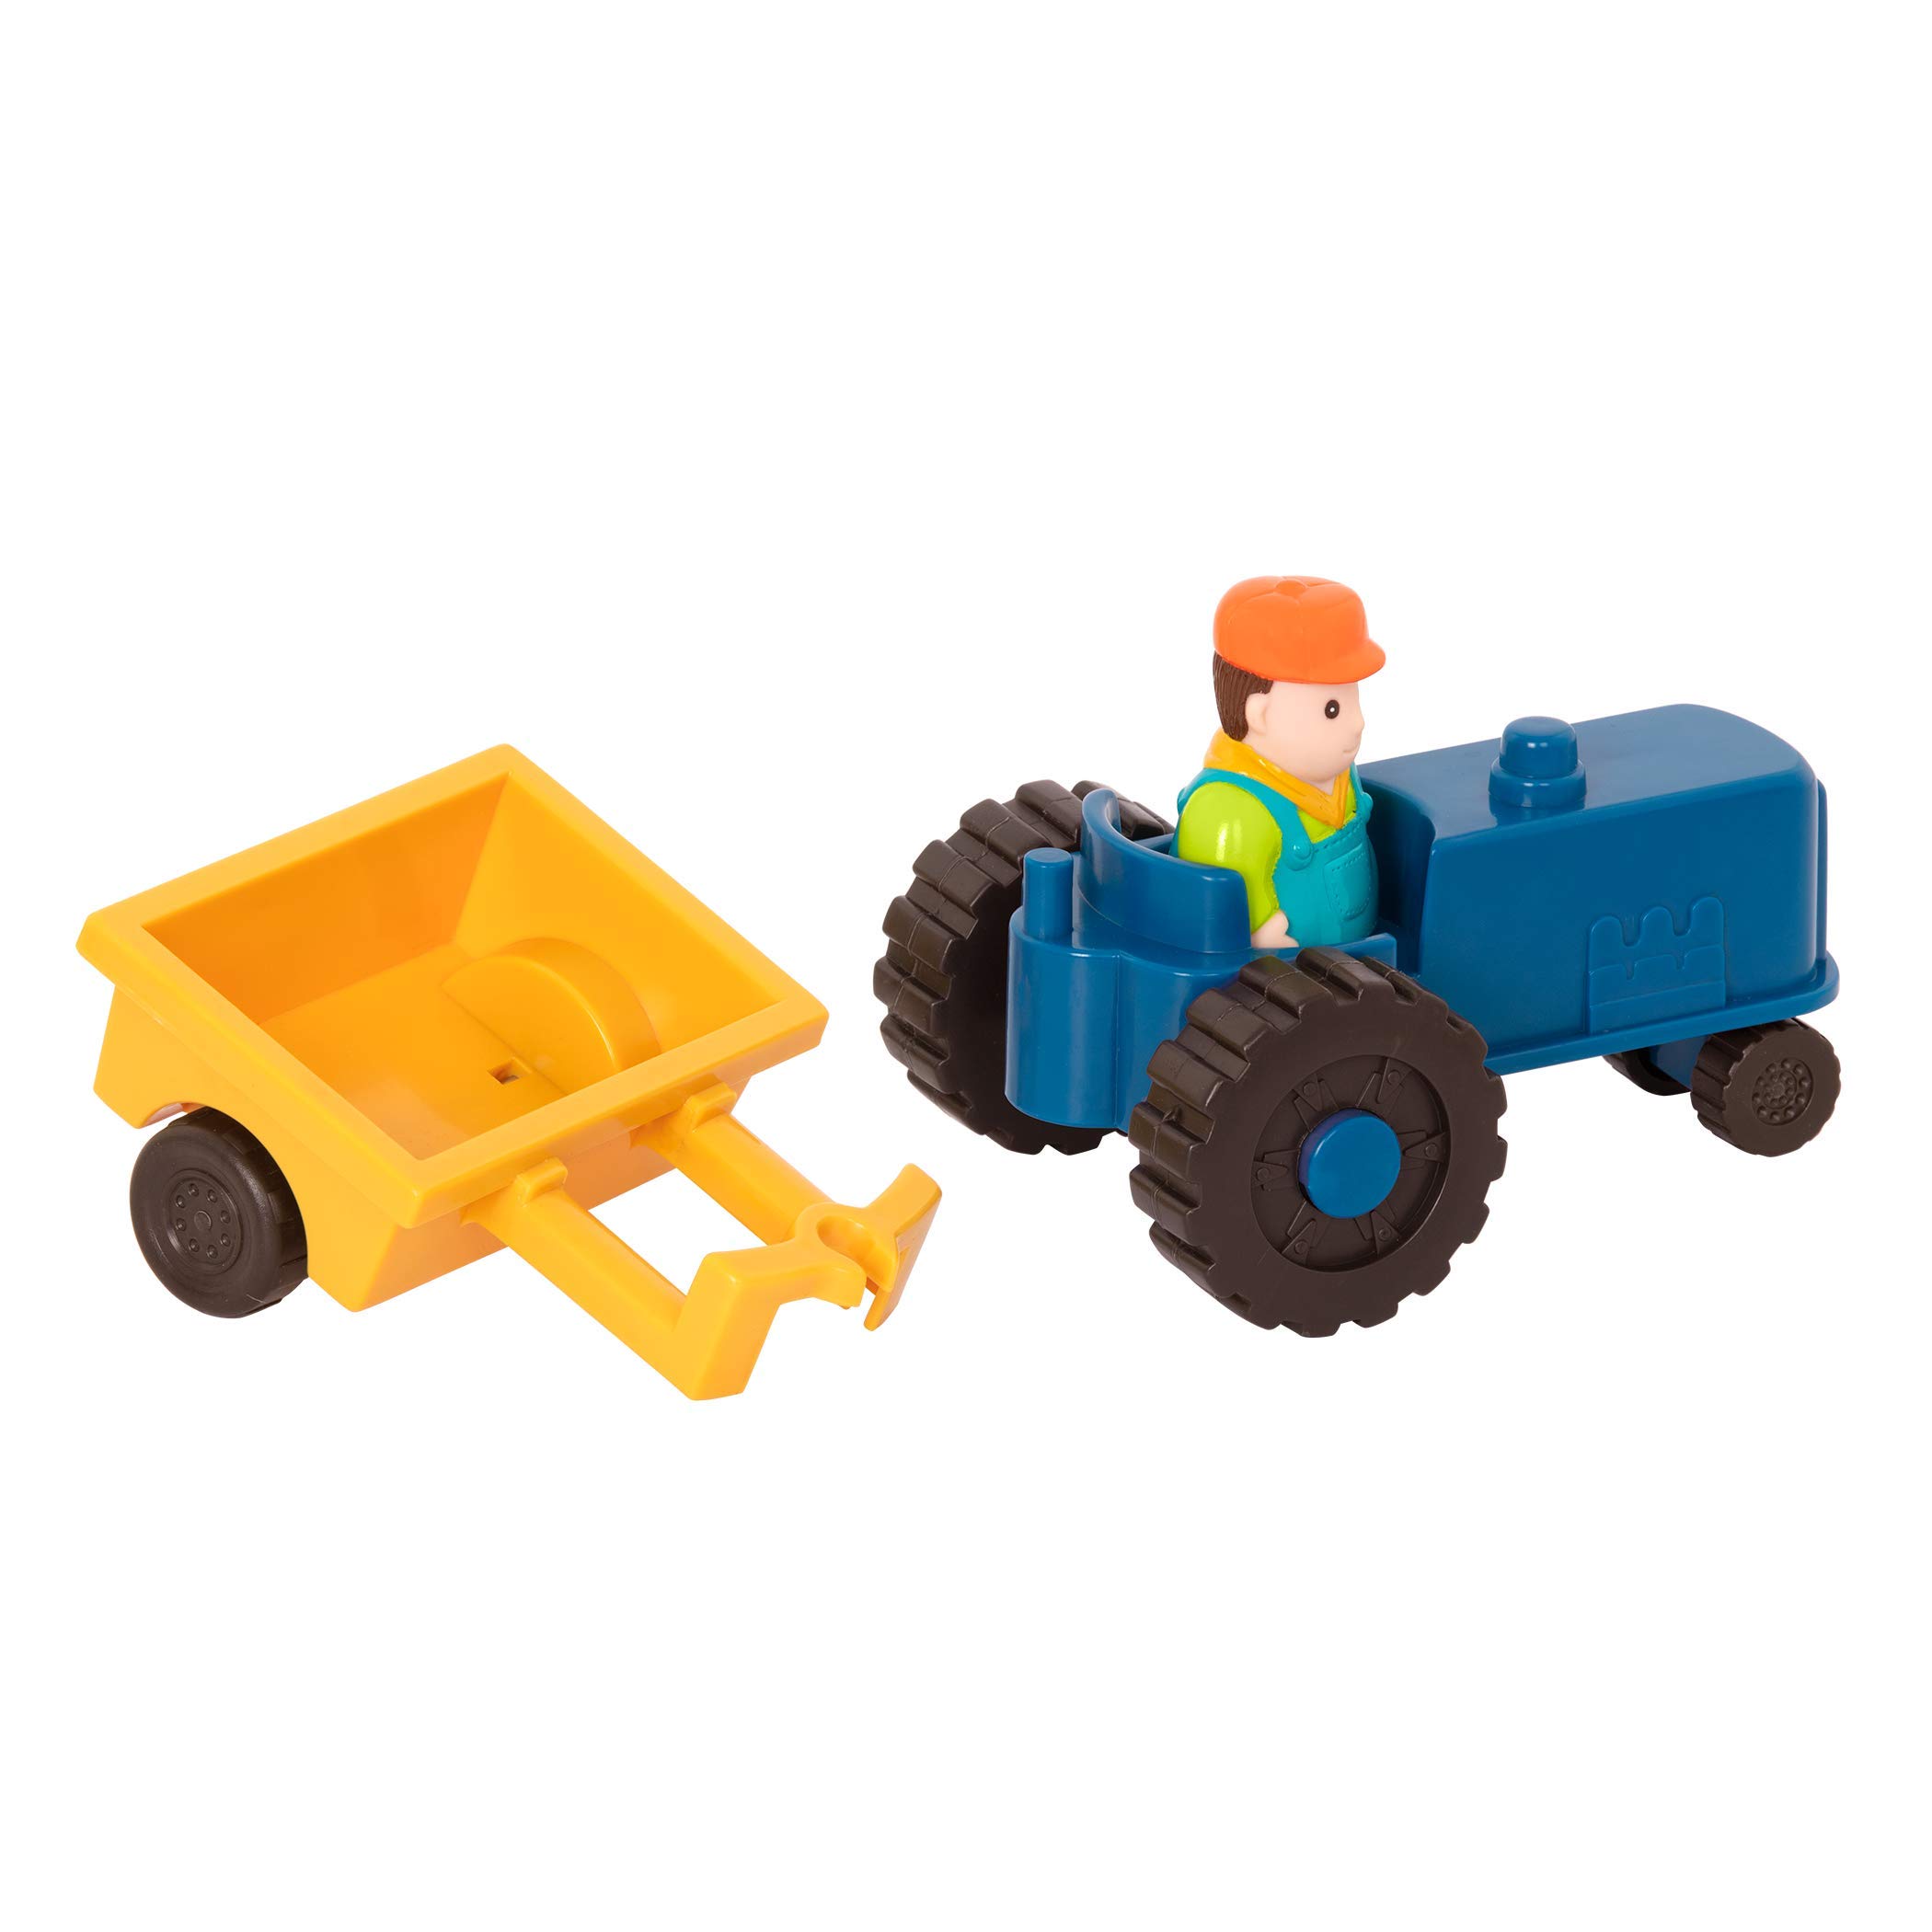 Battat – Farm Animals Play Set – 25 Farm Toys for Toddlers – Animals, Fences, Farmers, Tractor, Trailer & More – Little Farmer’s Playset – 18 Months + (BT2662Z)